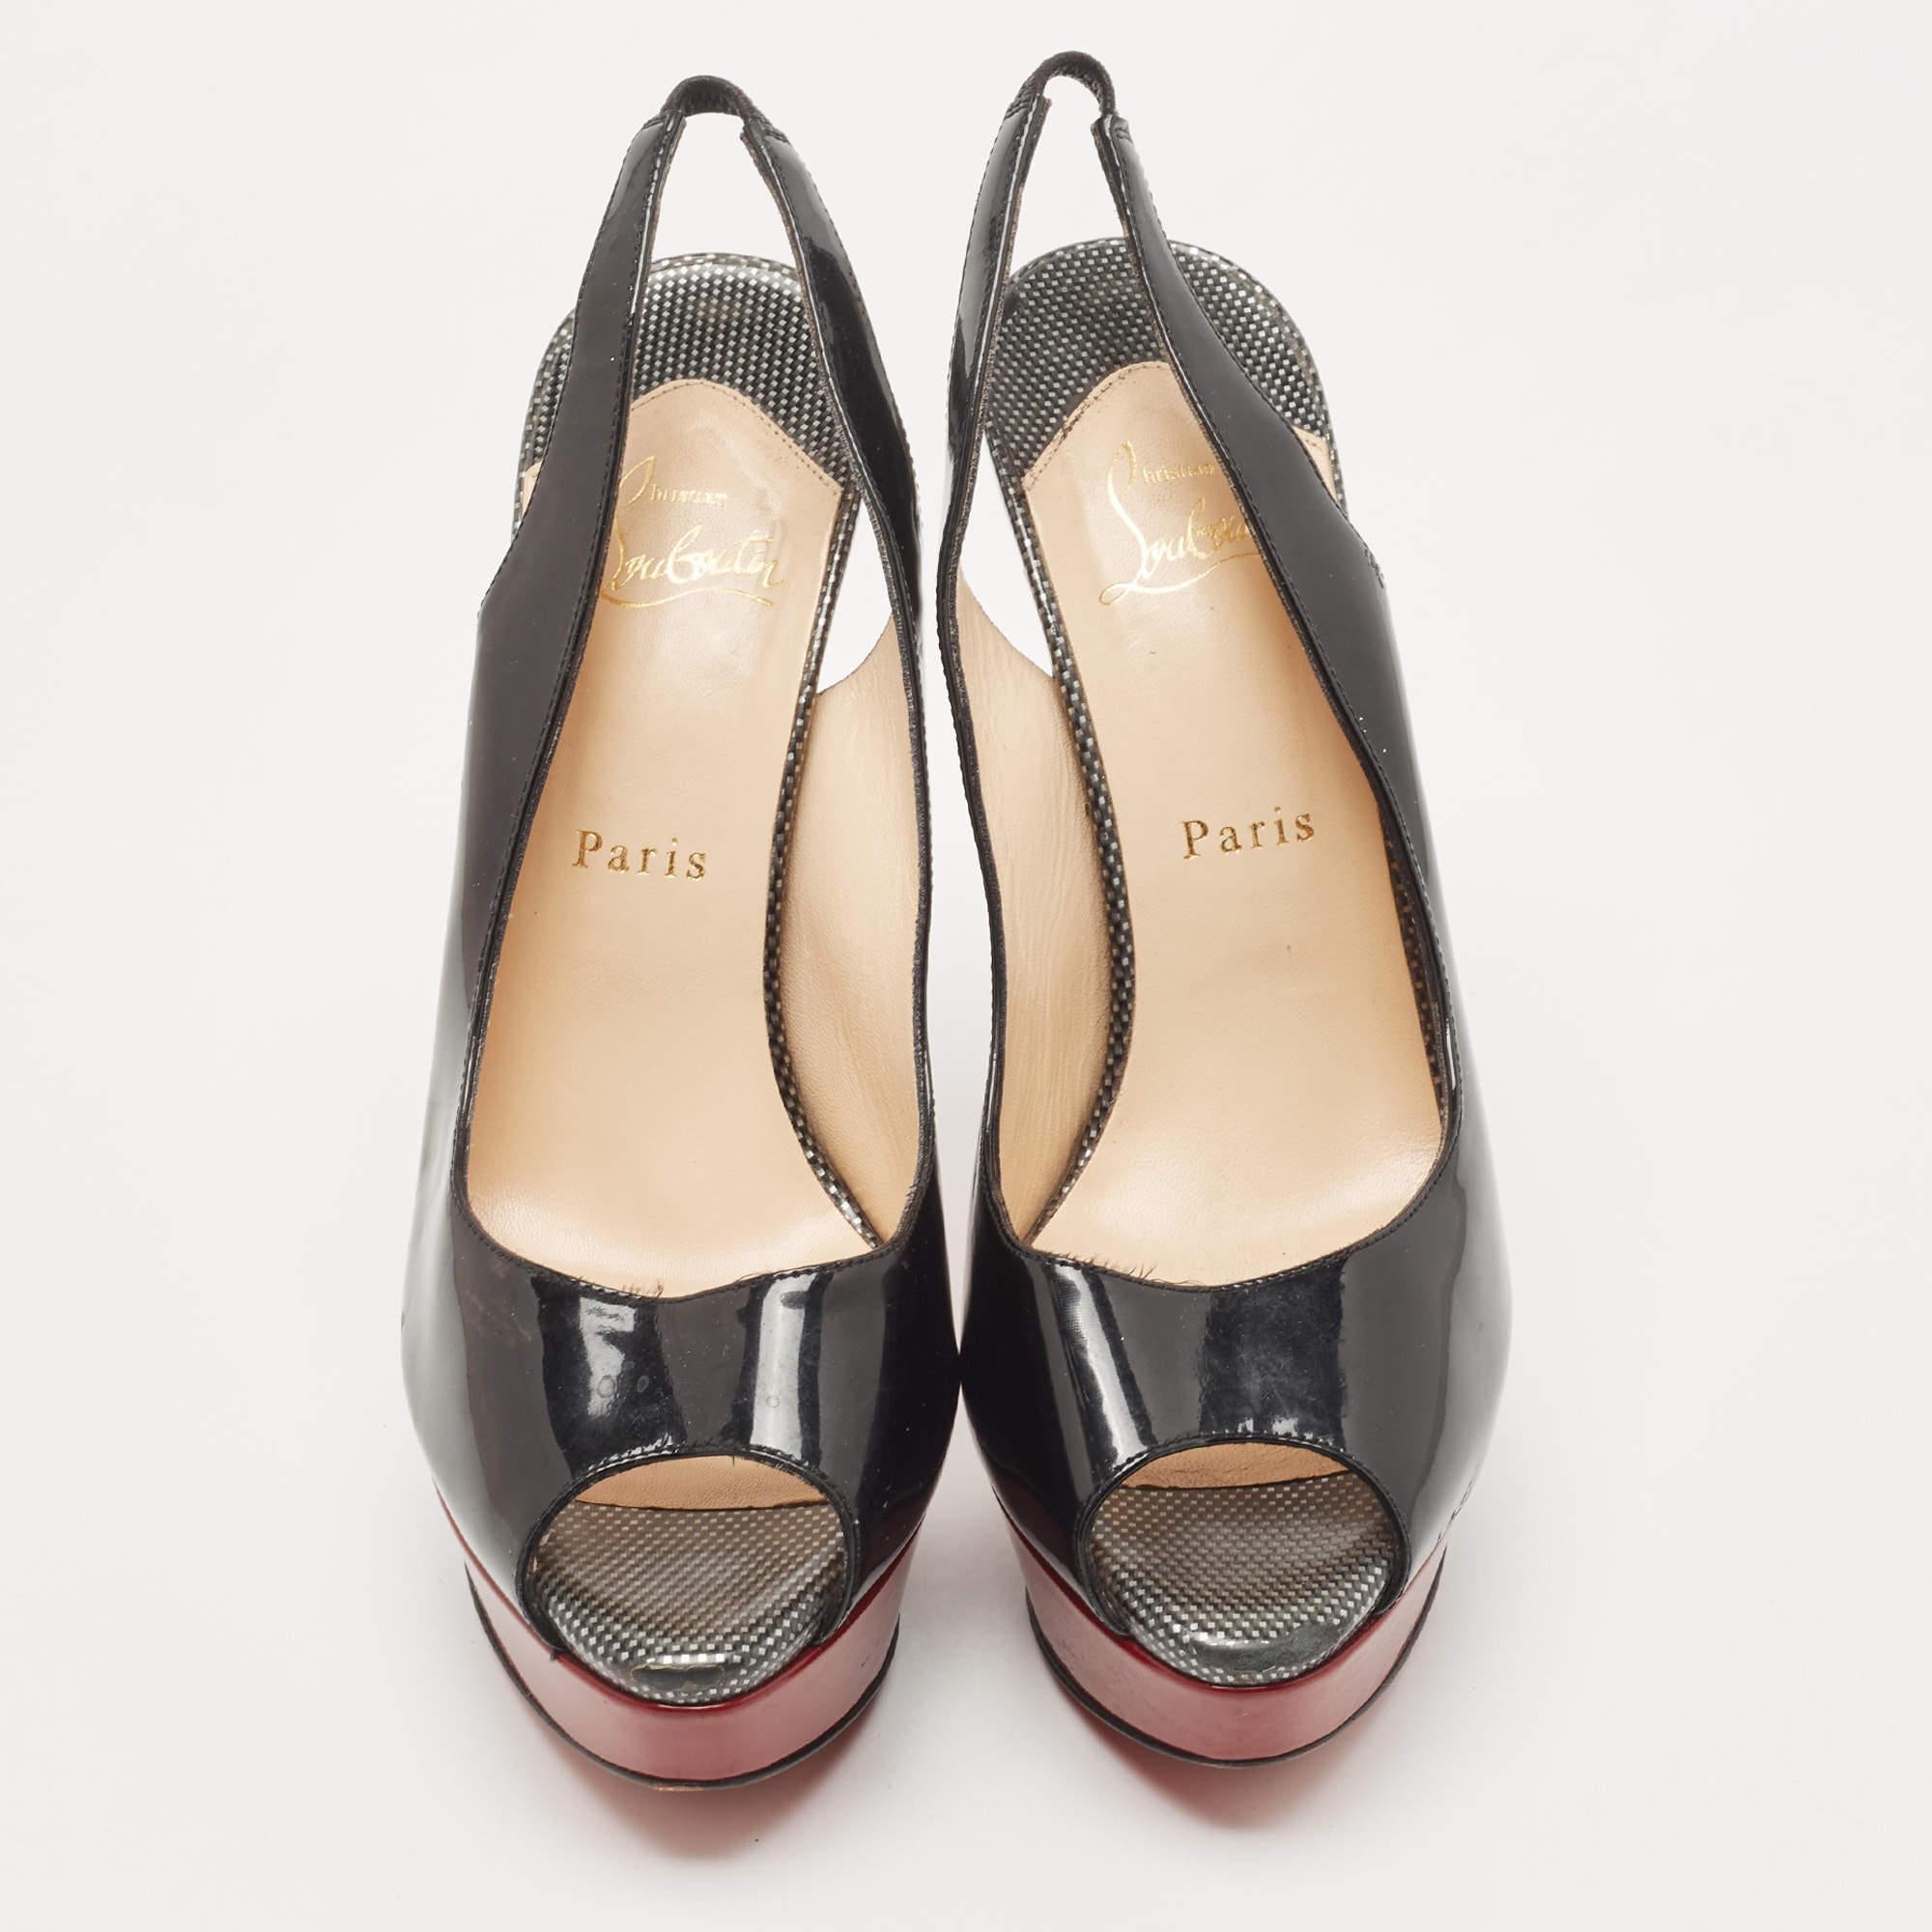 Christian Louboutin Black Patent Lady Peep Slingback Sandals Size 39.5 In Good Condition For Sale In Dubai, Al Qouz 2